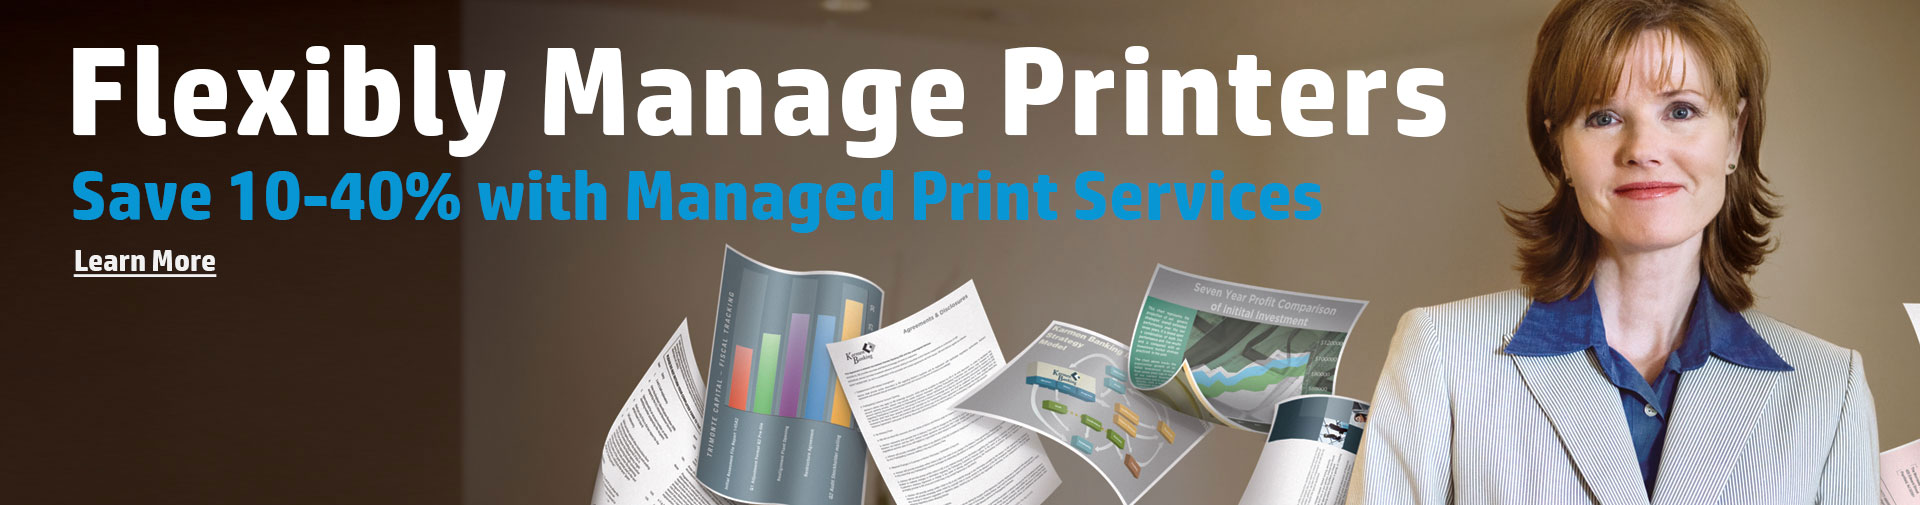 Flexibly Manage Printers